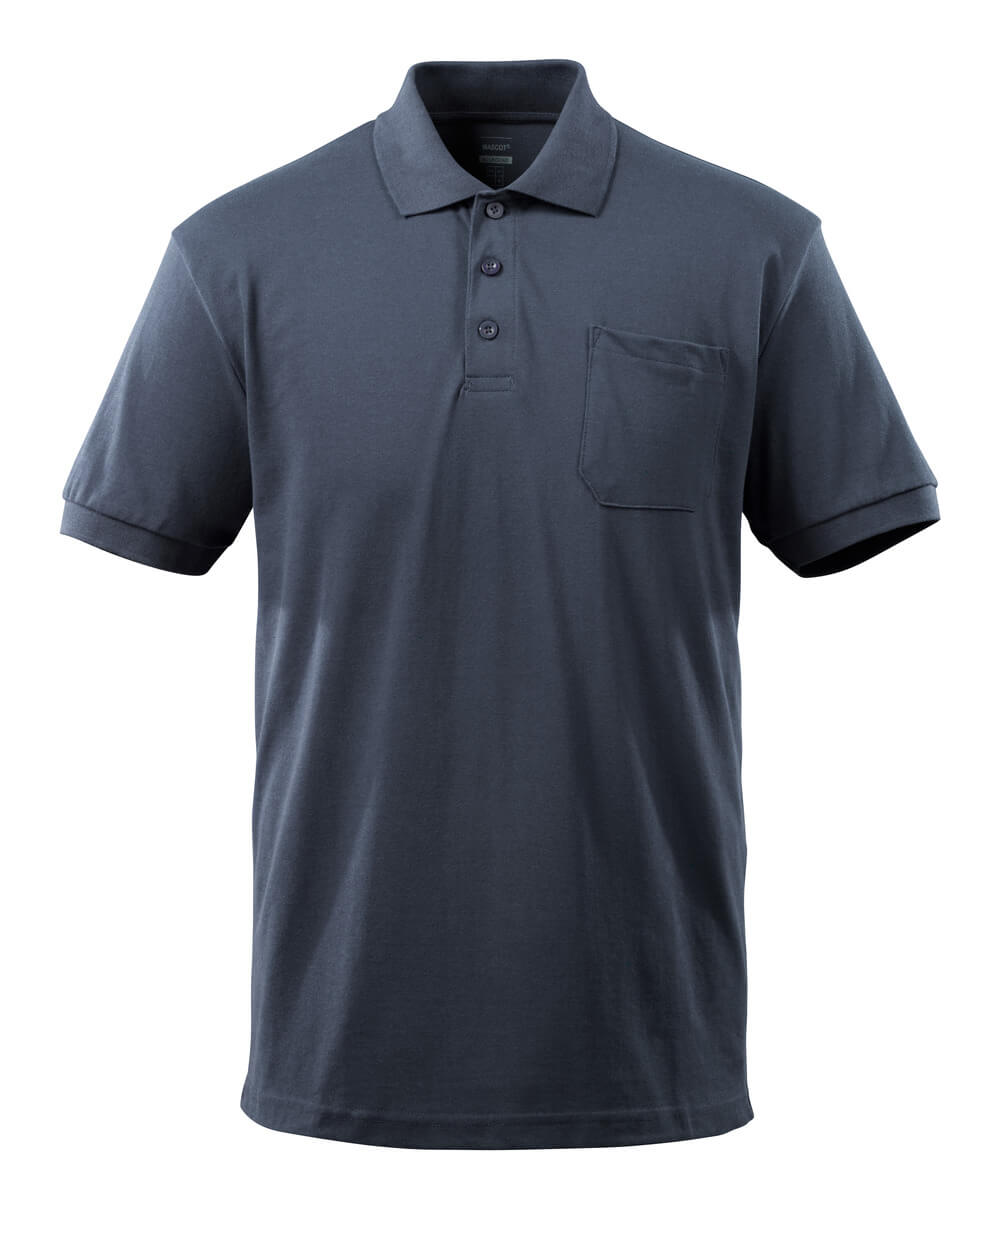 Mascot CROSSOVER  Orgon Polo Shirt with chest pocket 51586 dark navy